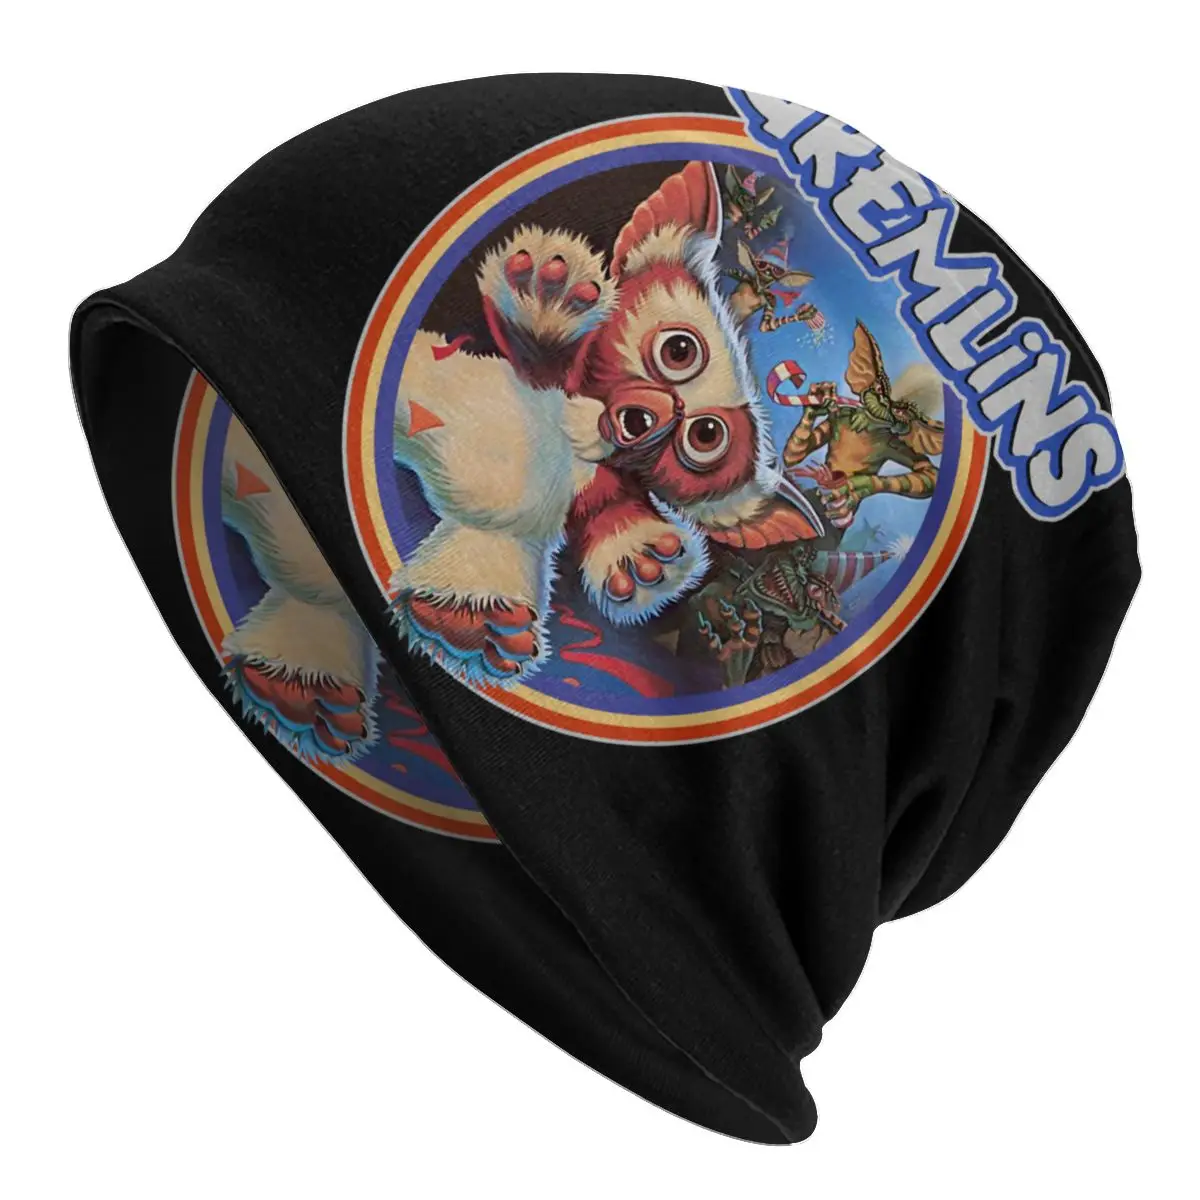 

Gremlins 84 Beanies Caps Unisex Fashion Winter Warm Knitting Hat Adult Gizmo 80s Movie Mogwai Monster Retro Sci Fi Bonnet Hats